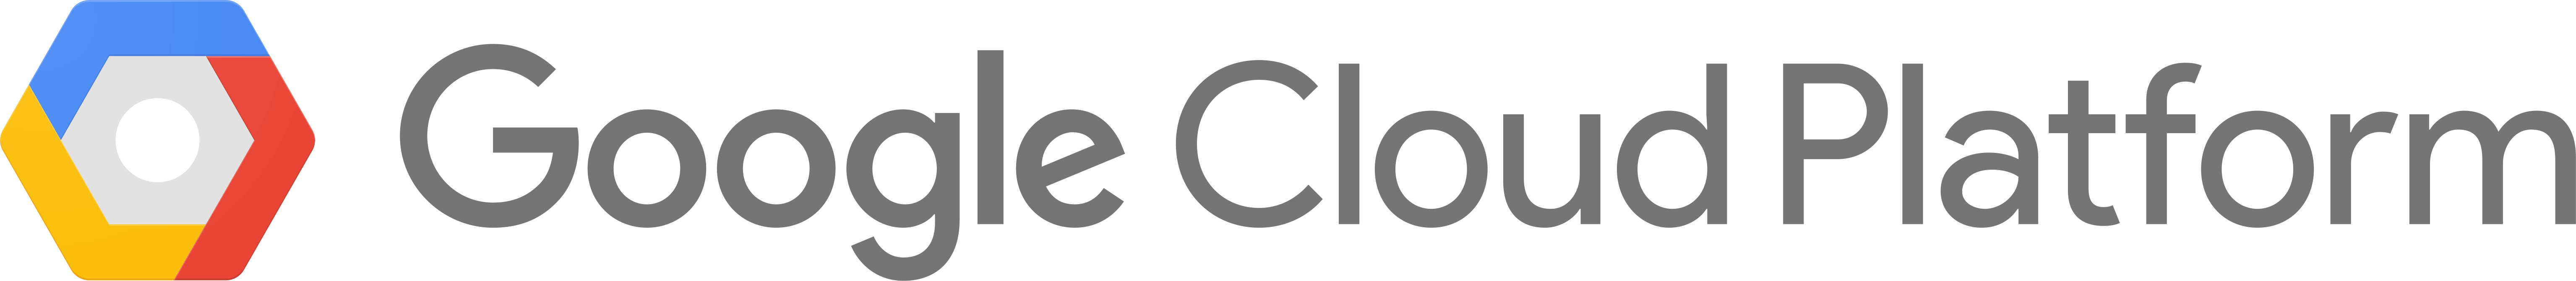 Logotipo de la plataforma Google Cloud